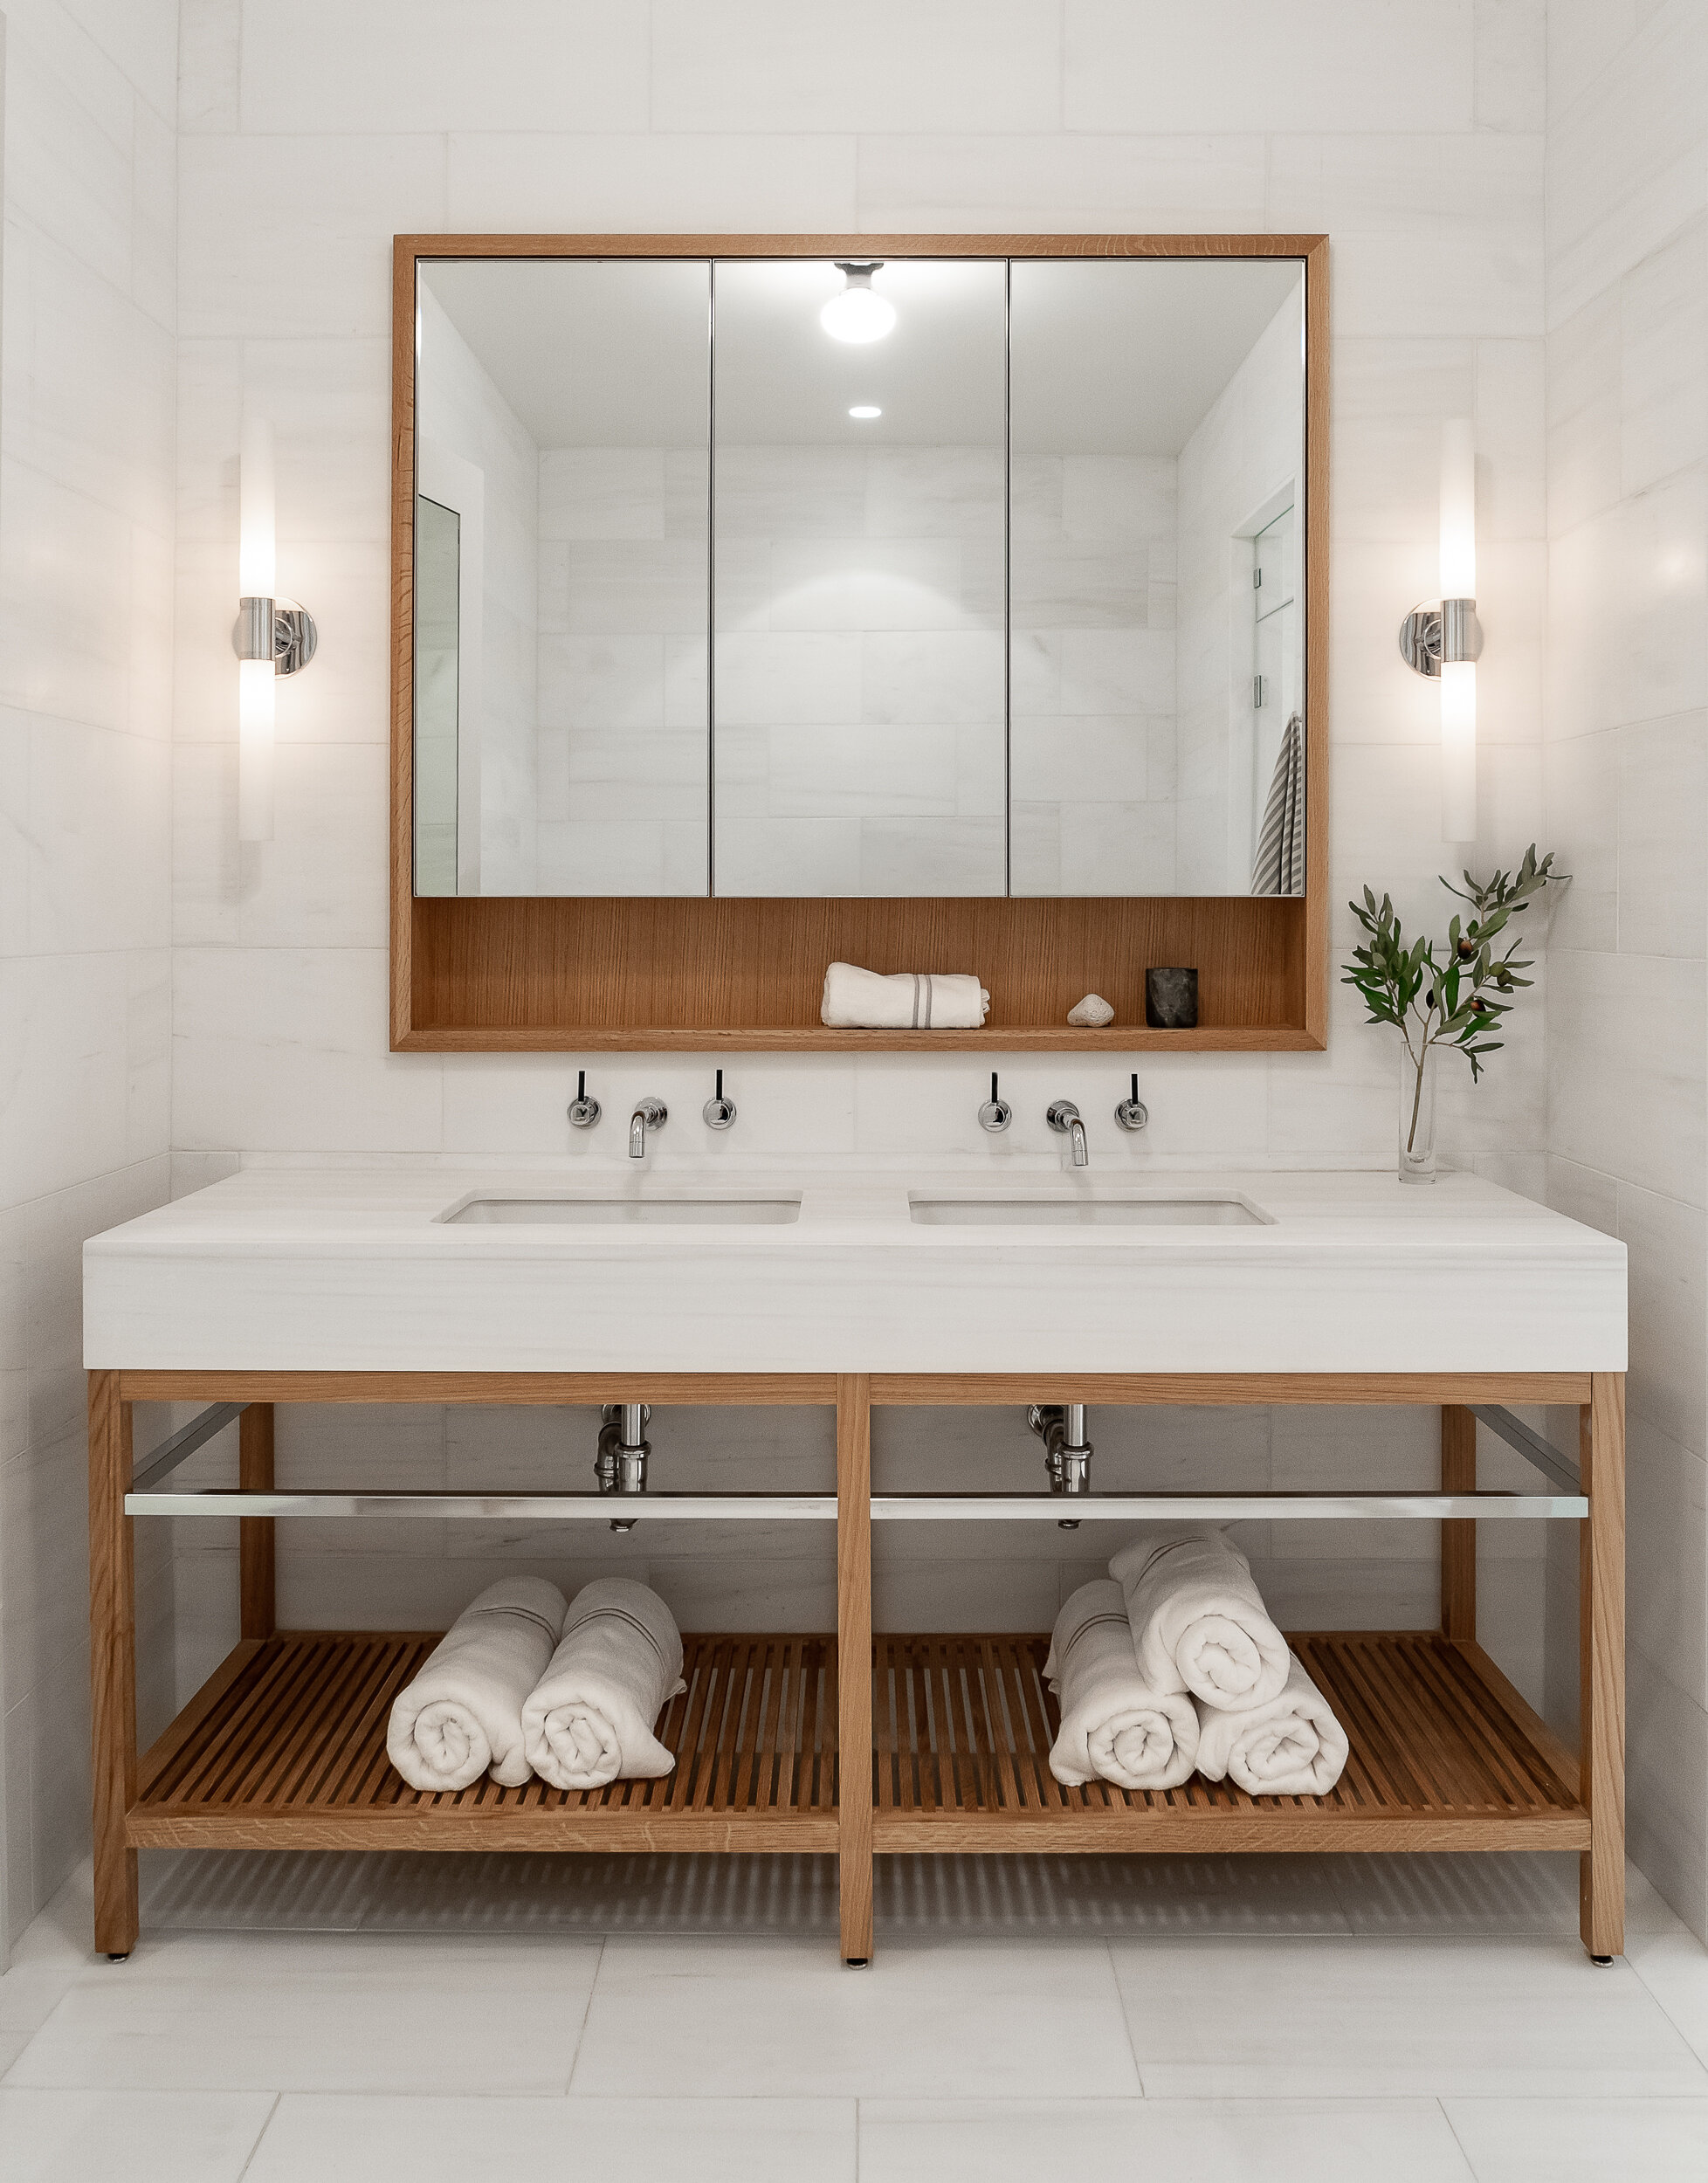 Modern Bathroom Architectural Photographer